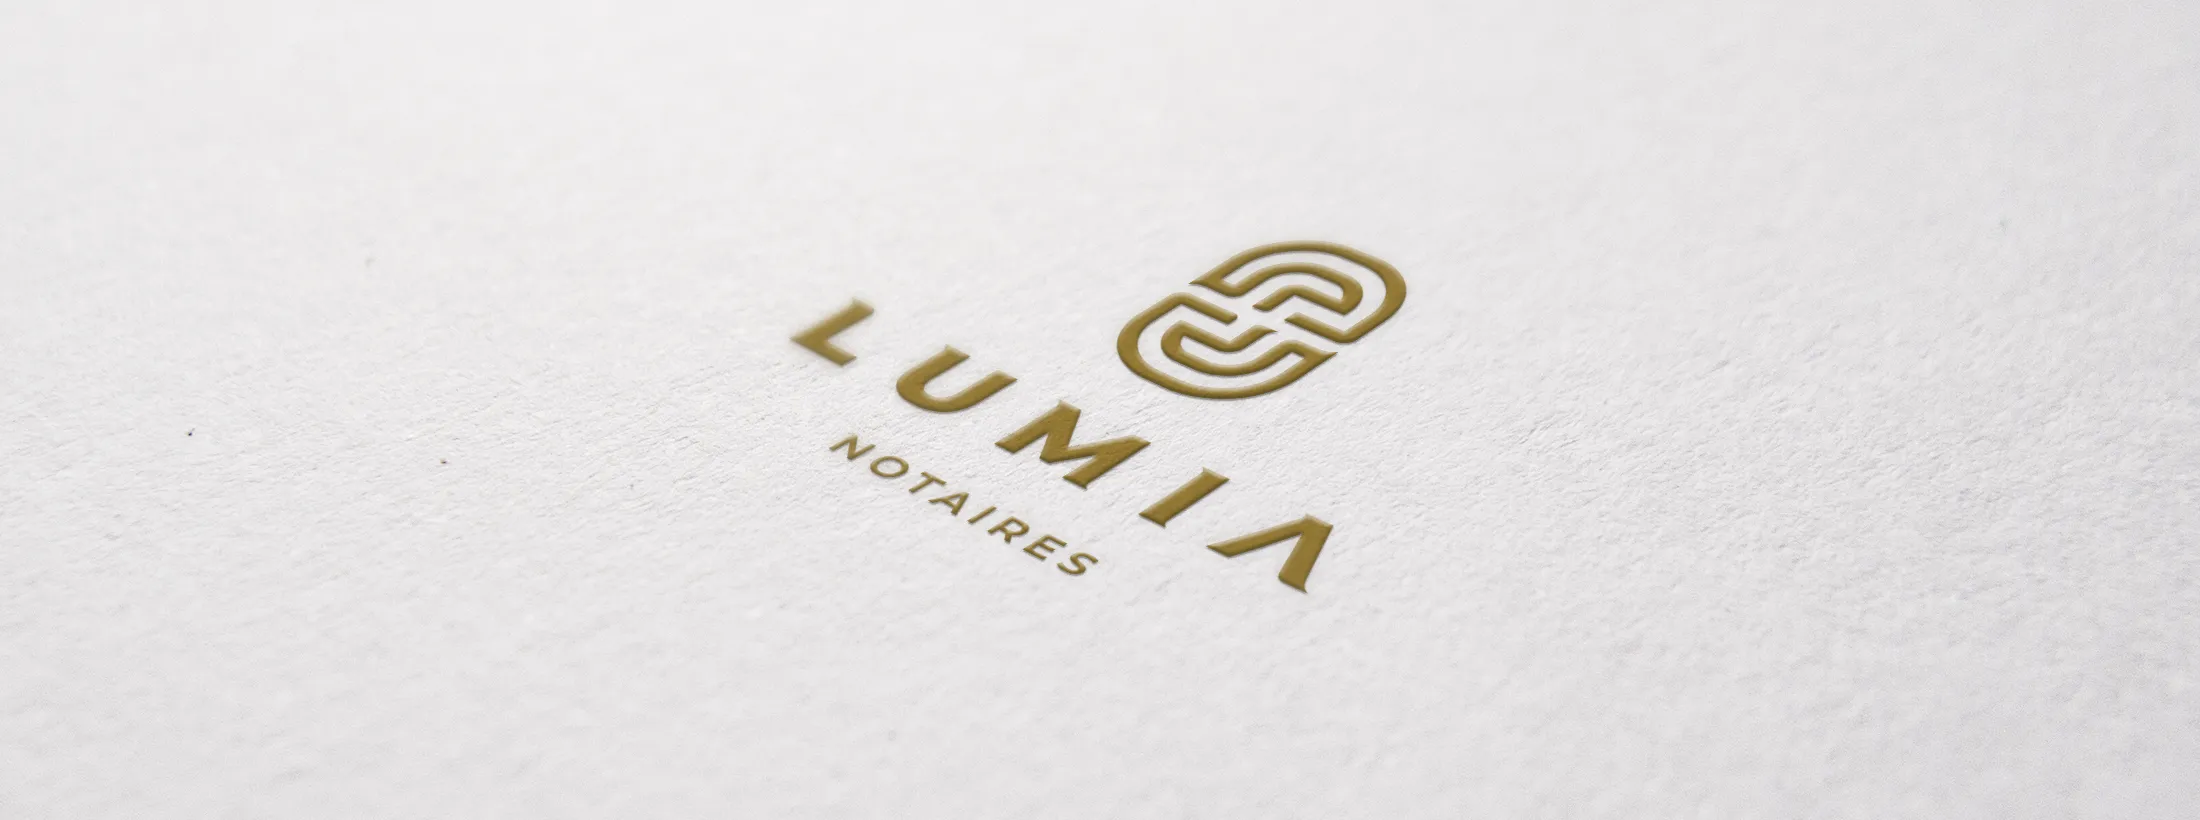 logo lumia branding phone identite visuelle osb communication